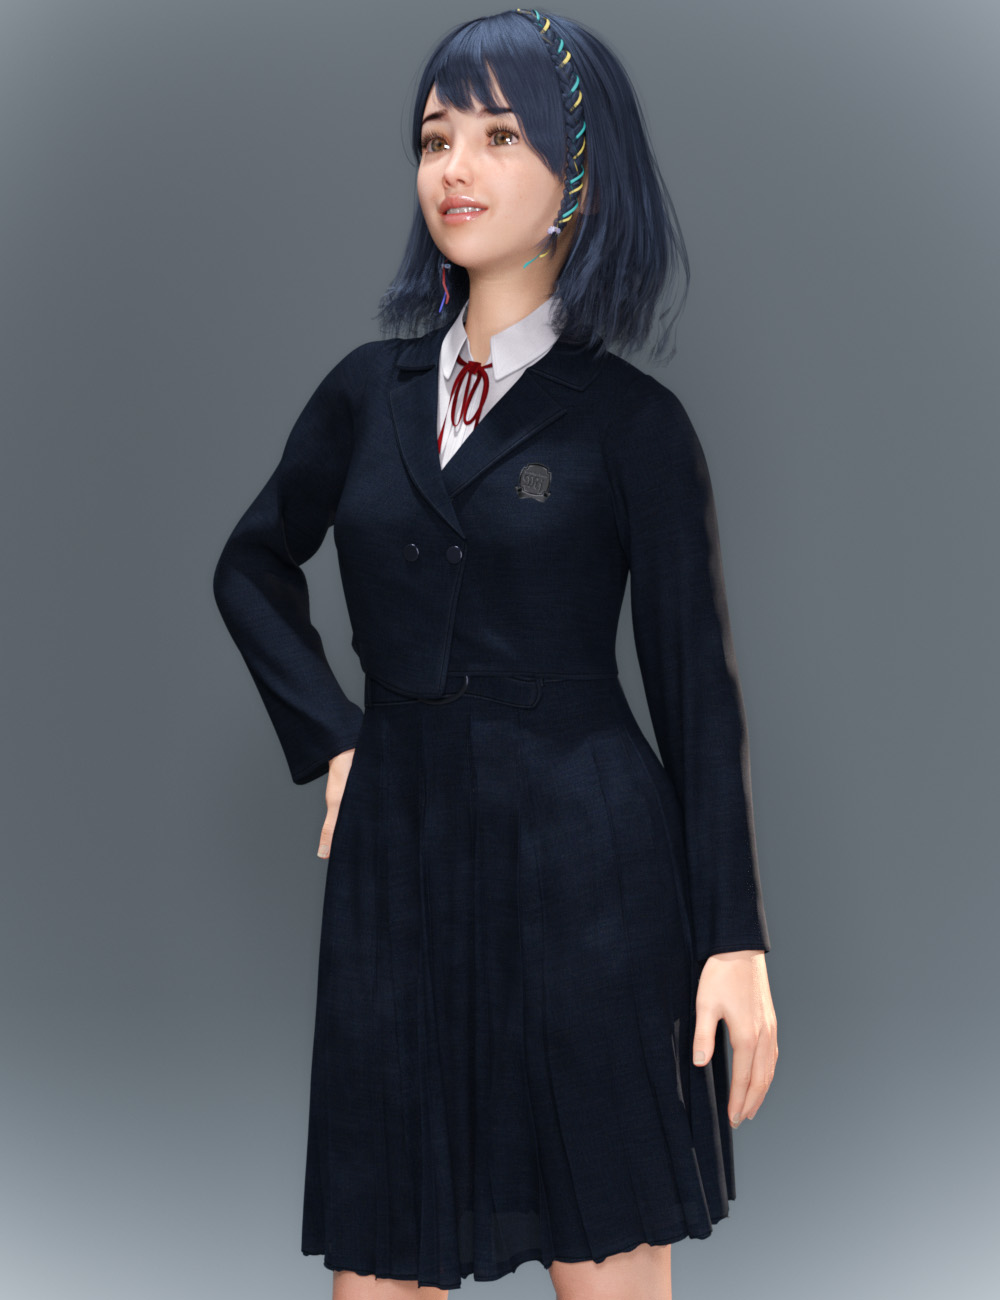 dForce Dream High School Uniform for Genesis 8 and 8.1 Females by: tentman, 3D Models by Daz 3D